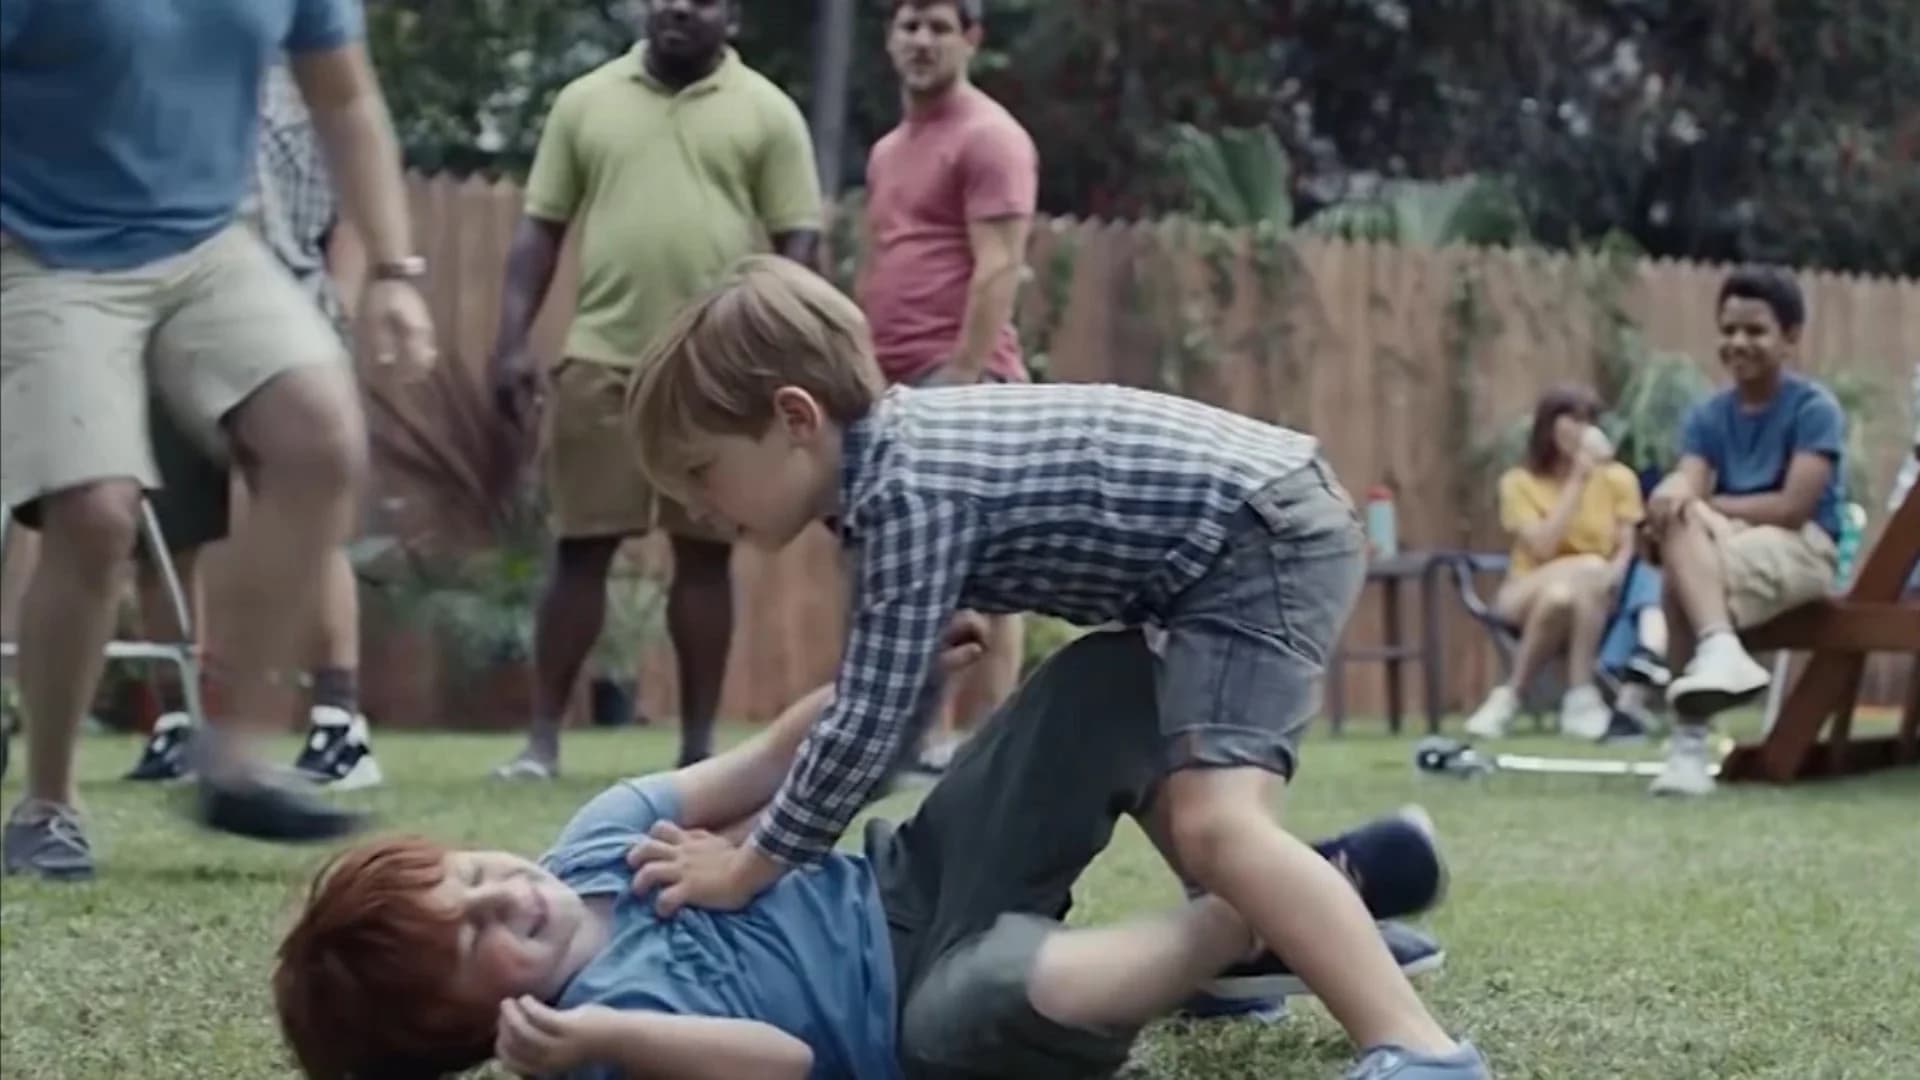 Razor burn: Gillette ad about ‘toxic masculinity’ stirs online uproar